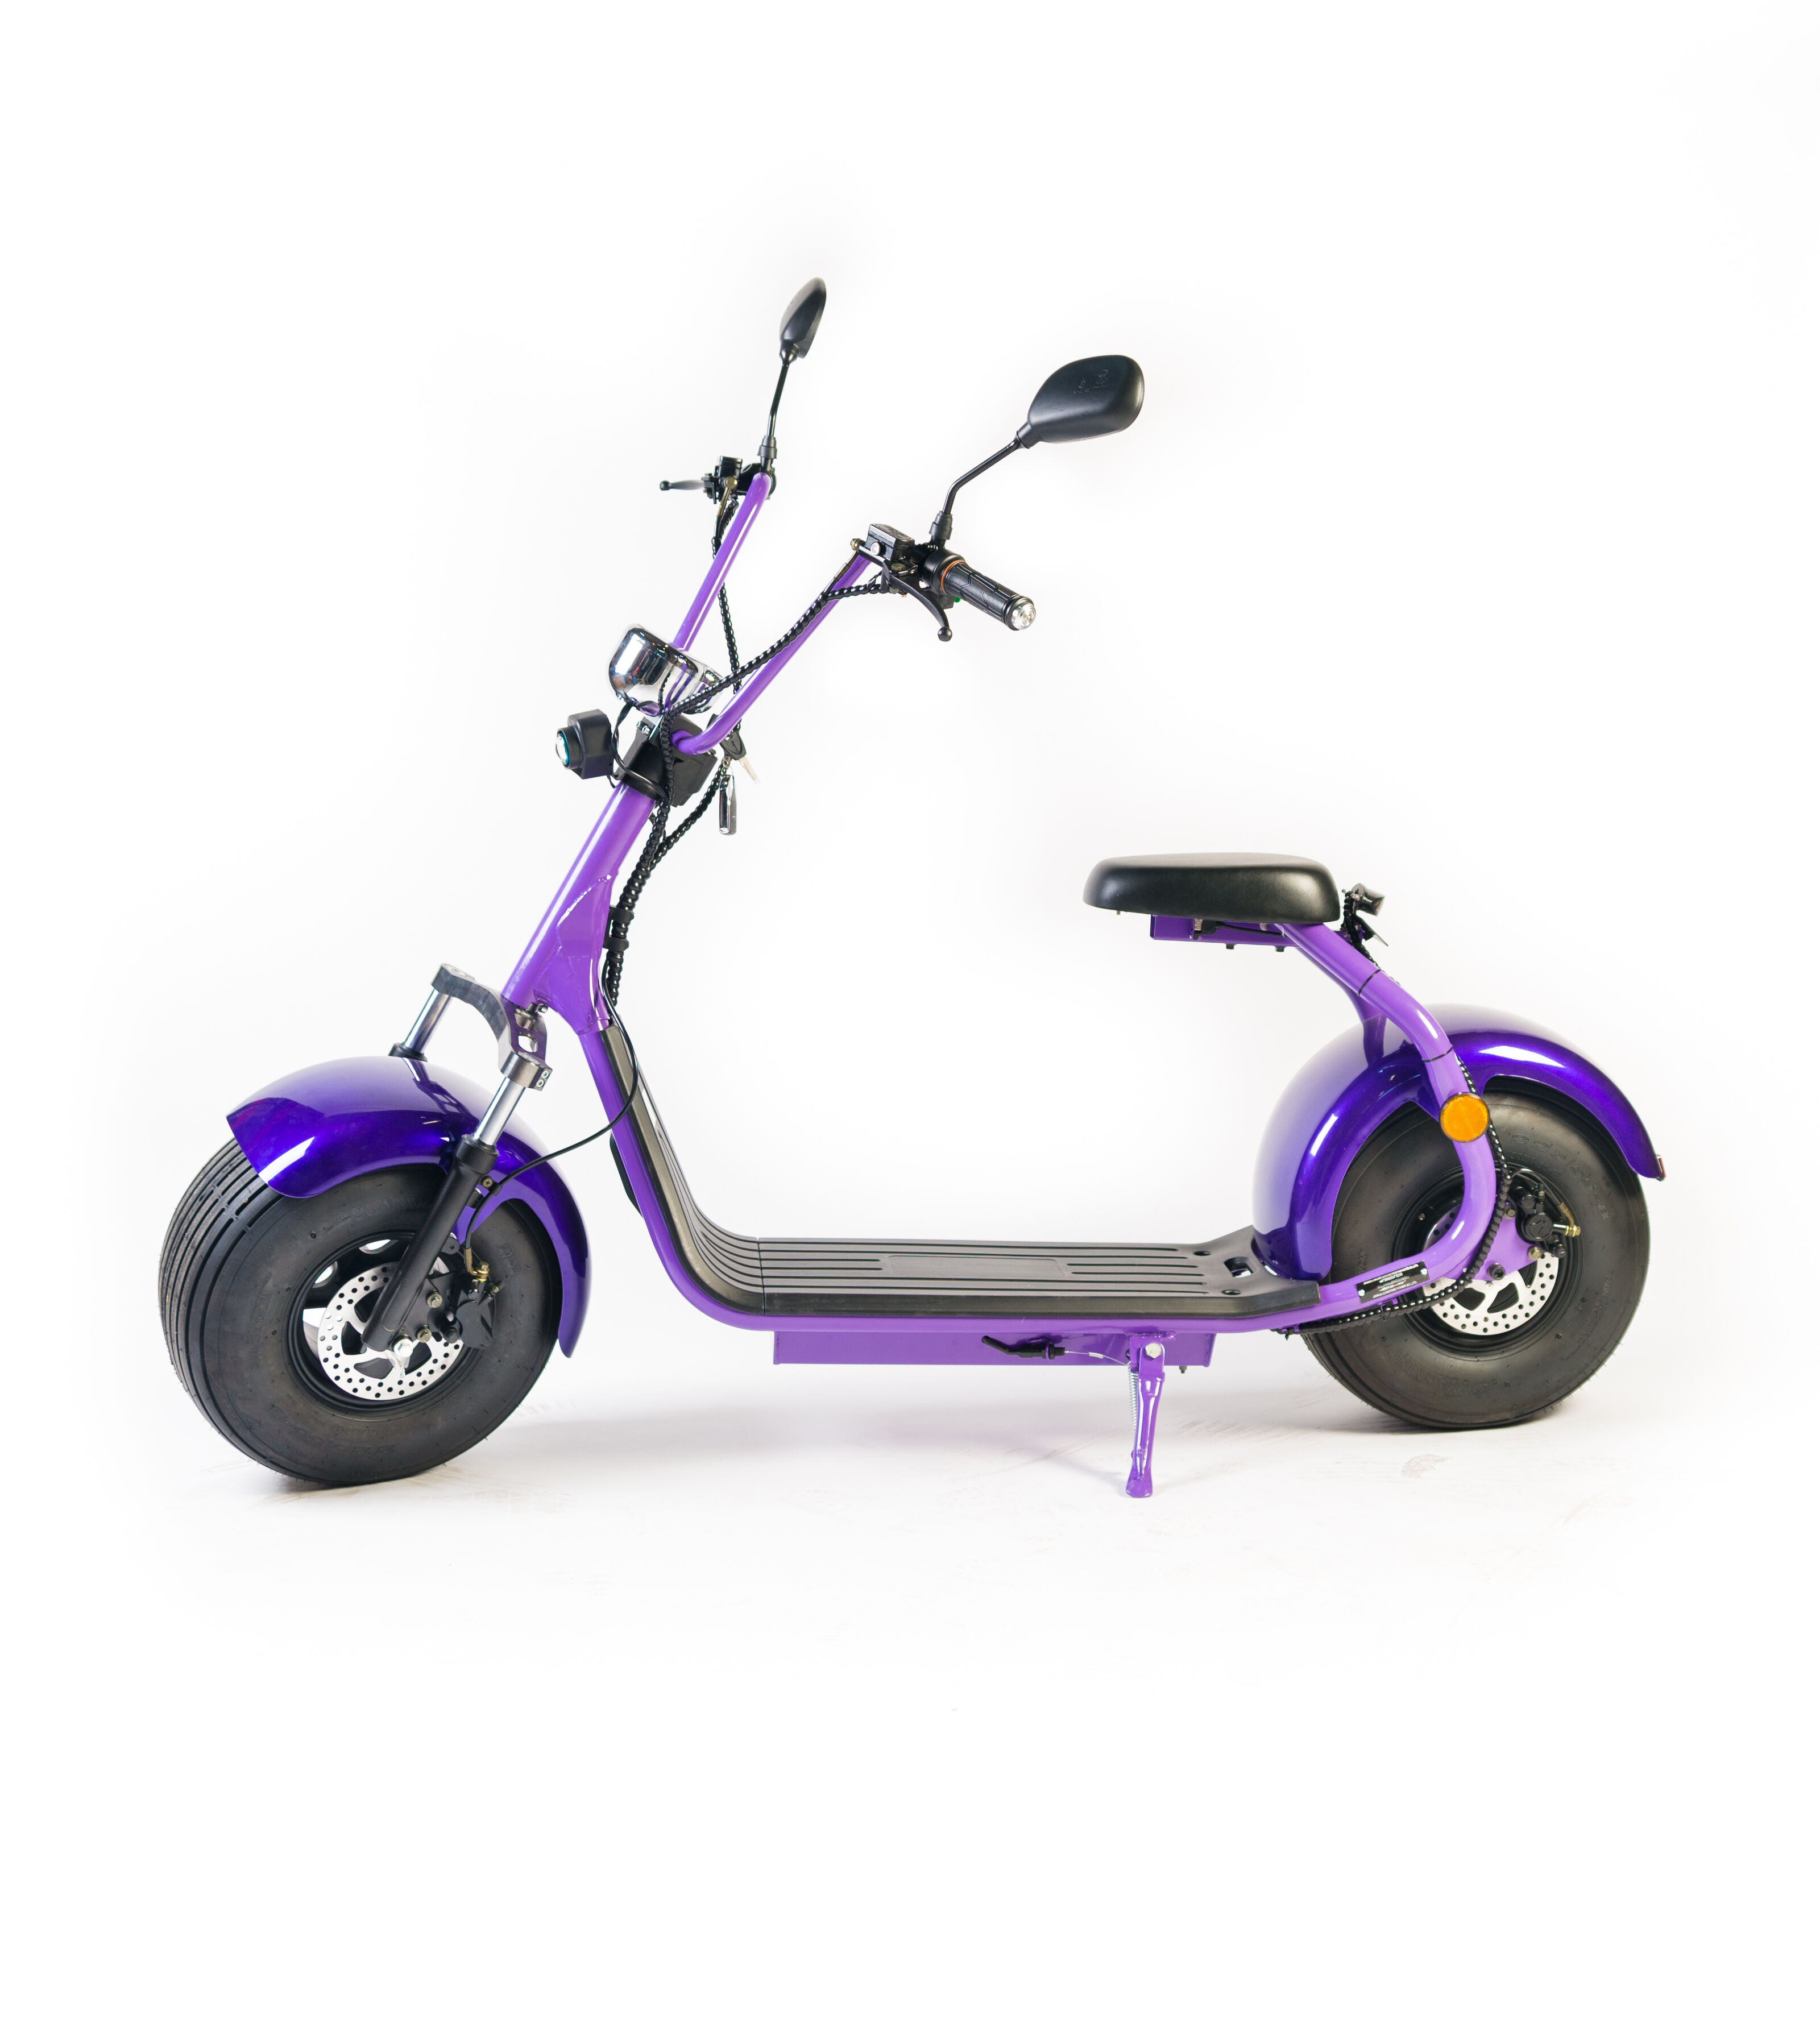 Moped L019 Citycoco, motor 1000 W, viteza 45 km/h (limitata prin lege), autonomie 40-60 km, Mov